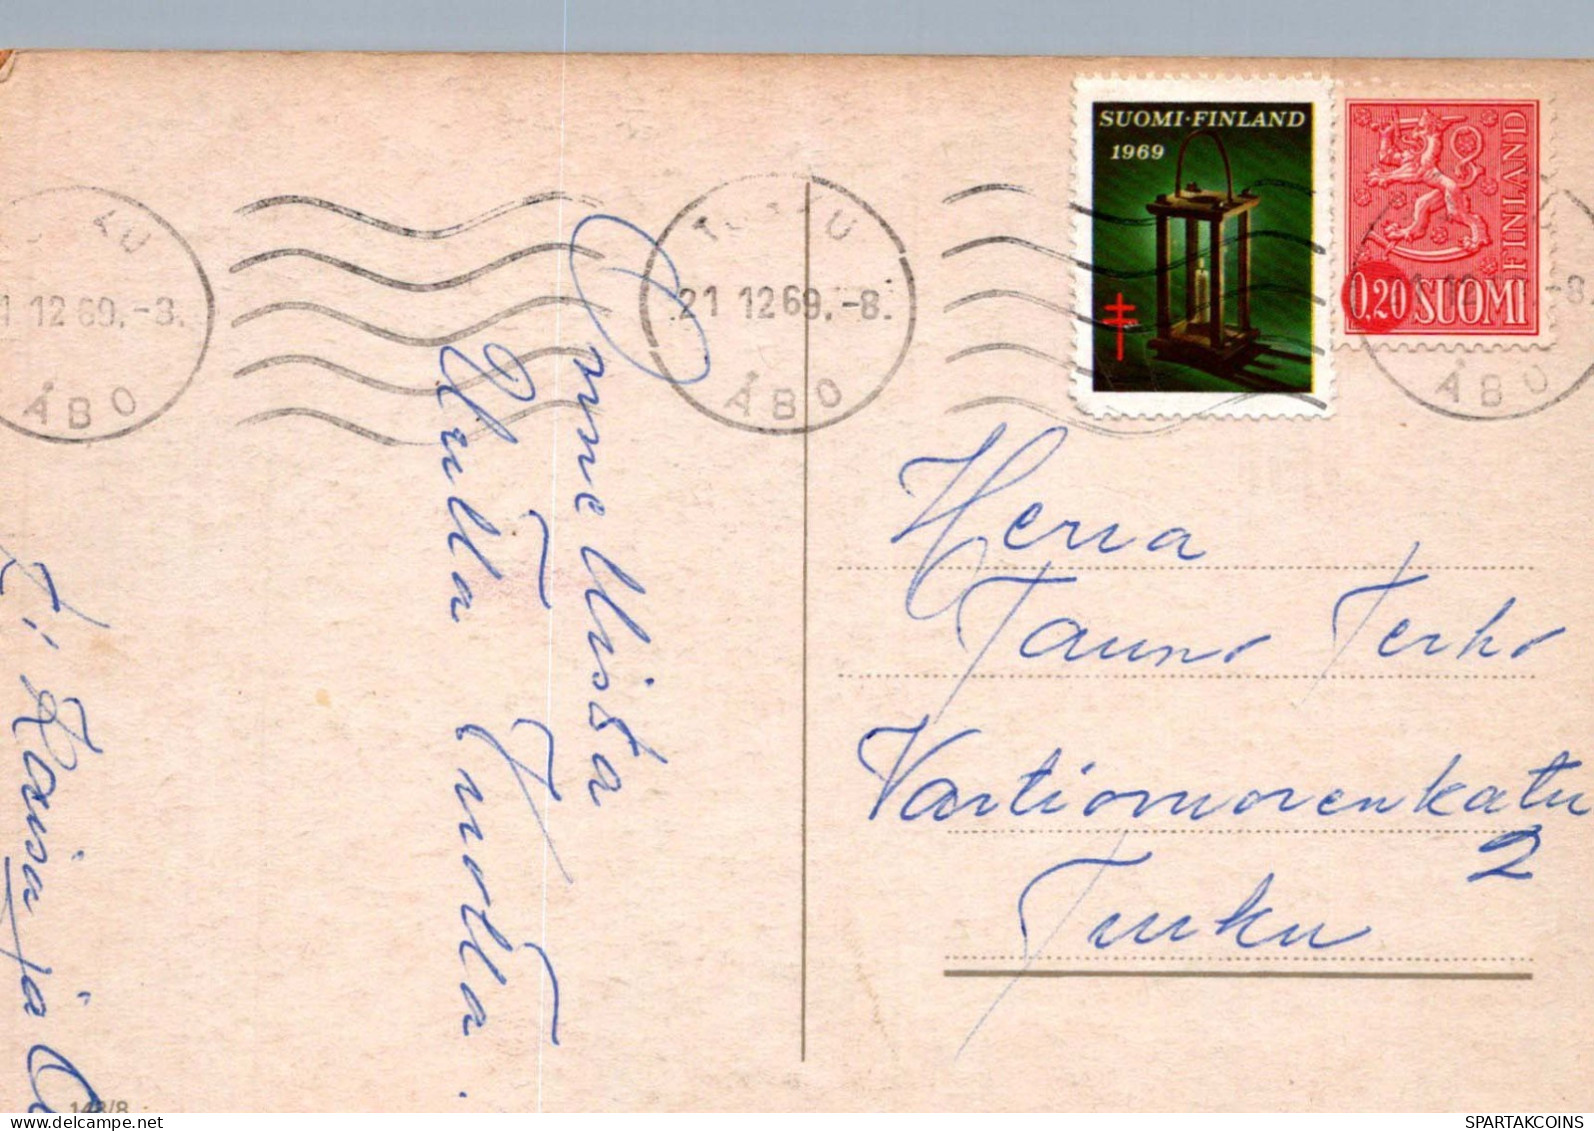 PAPÁ NOEL Feliz Año Navidad Vintage Tarjeta Postal CPSM #PBL169.A - Santa Claus